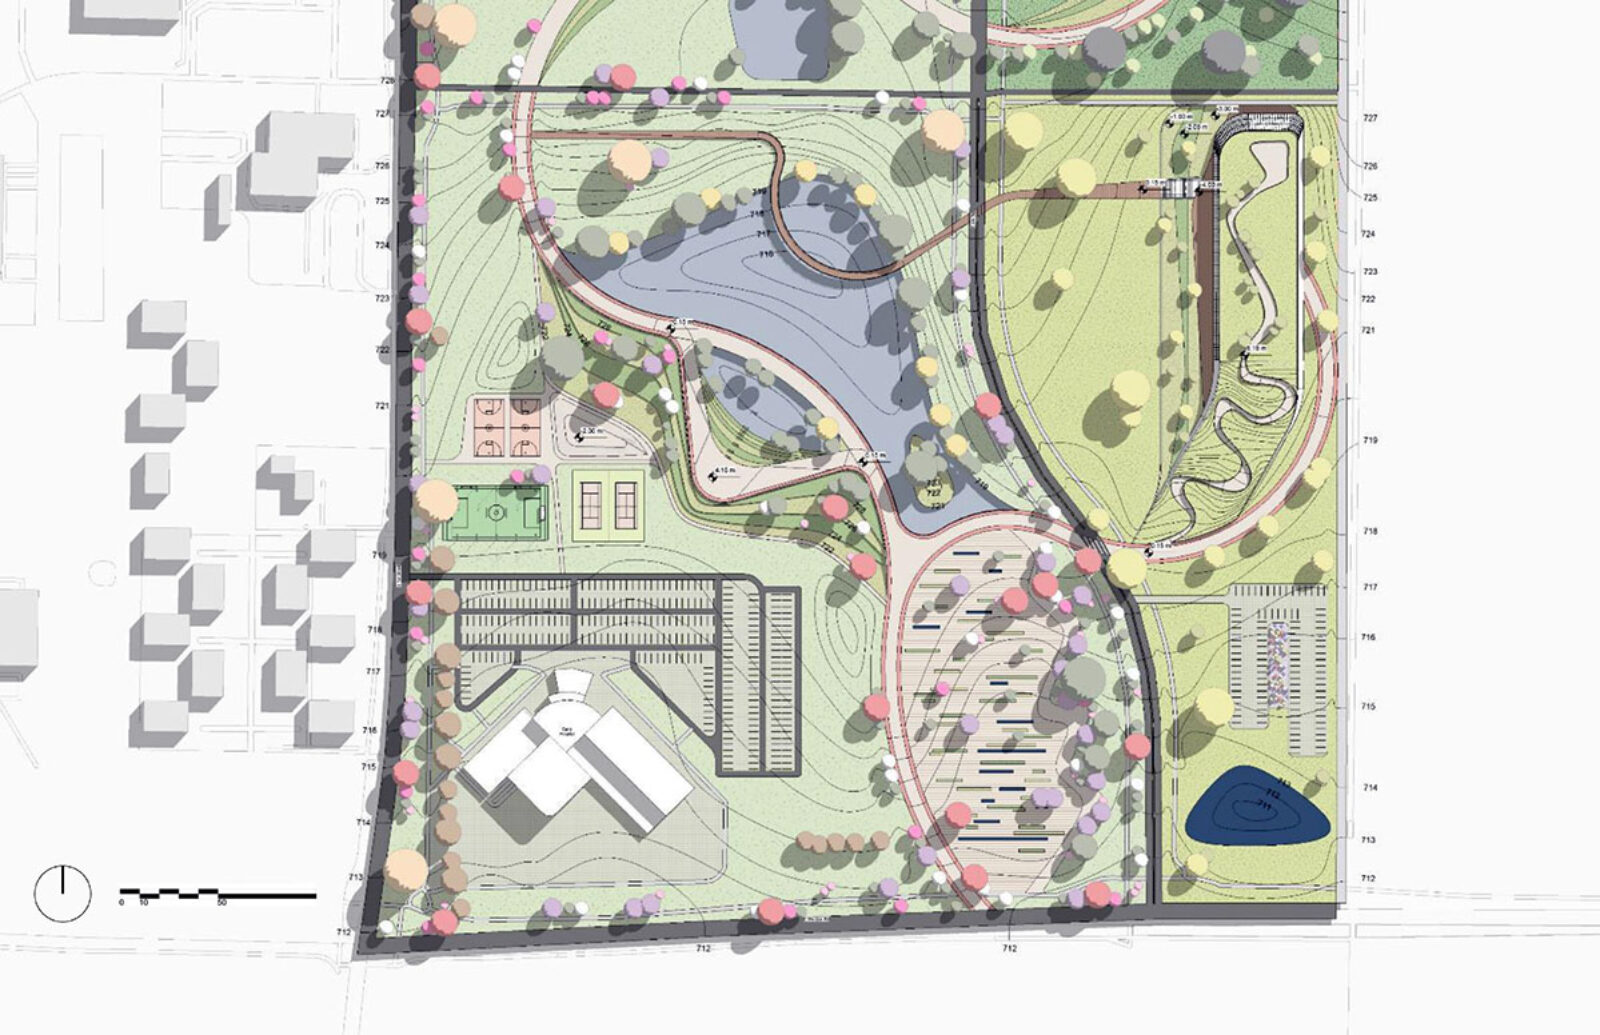 Plan by Sultan Badukail, UIUC Research Park, LA 533: Planning & Design Studio I (Fall 2021)